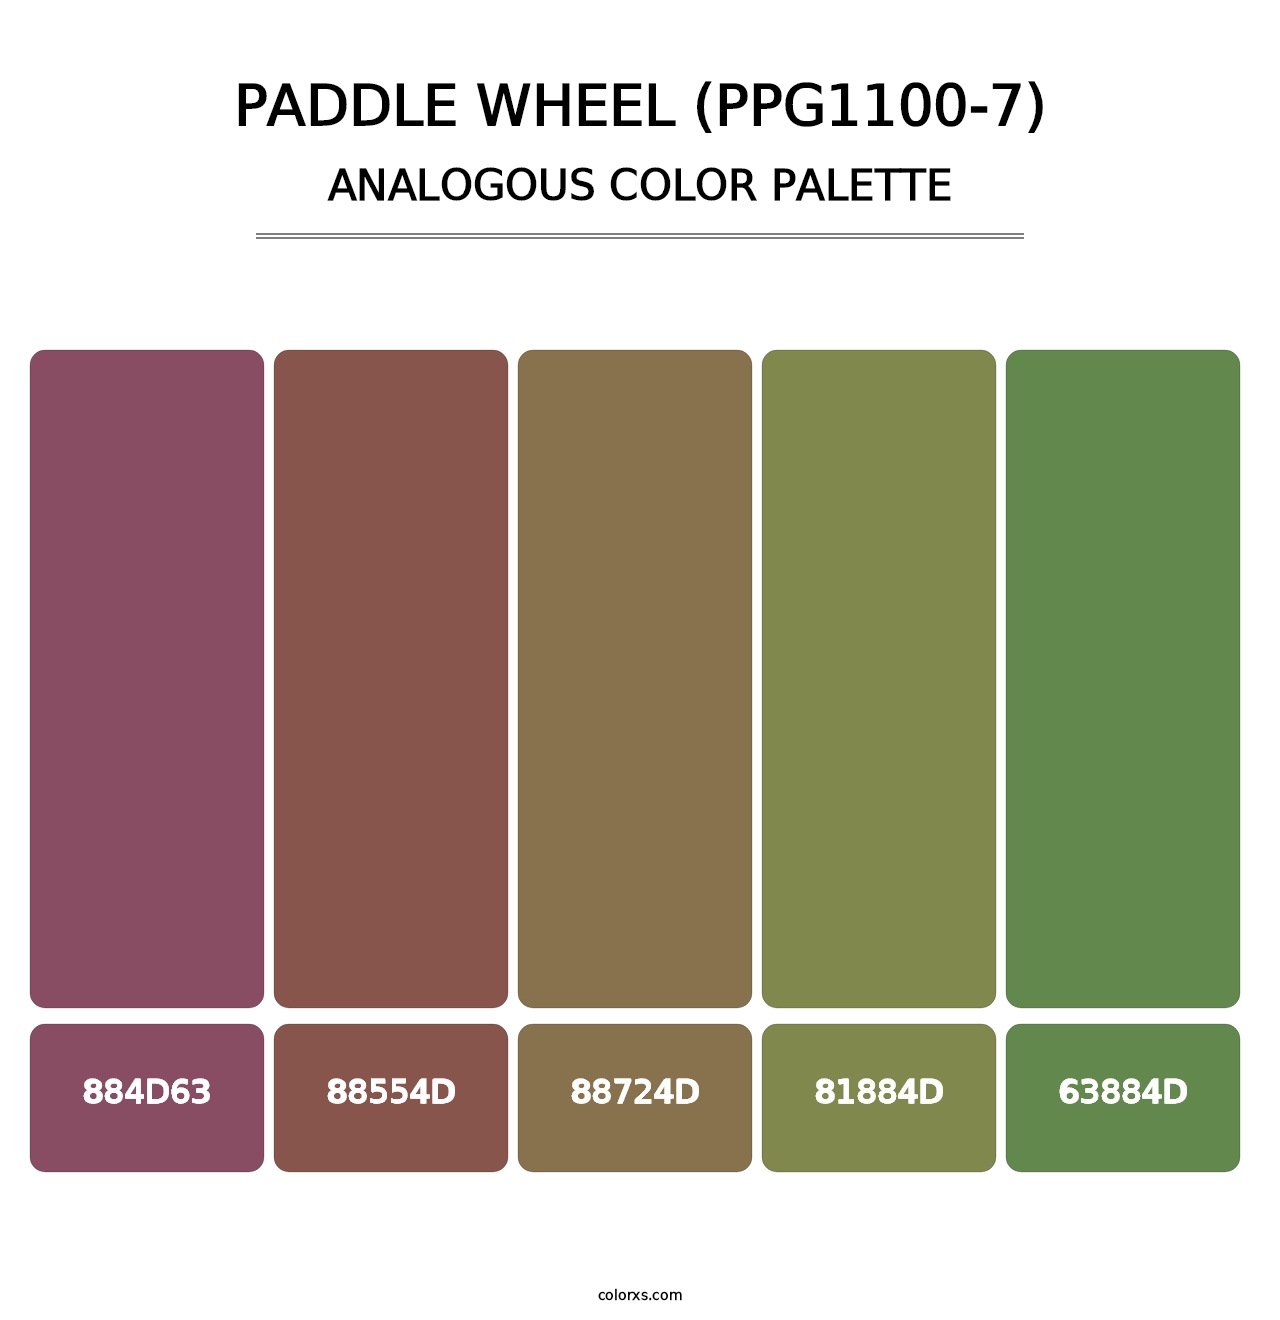 Paddle Wheel (PPG1100-7) - Analogous Color Palette